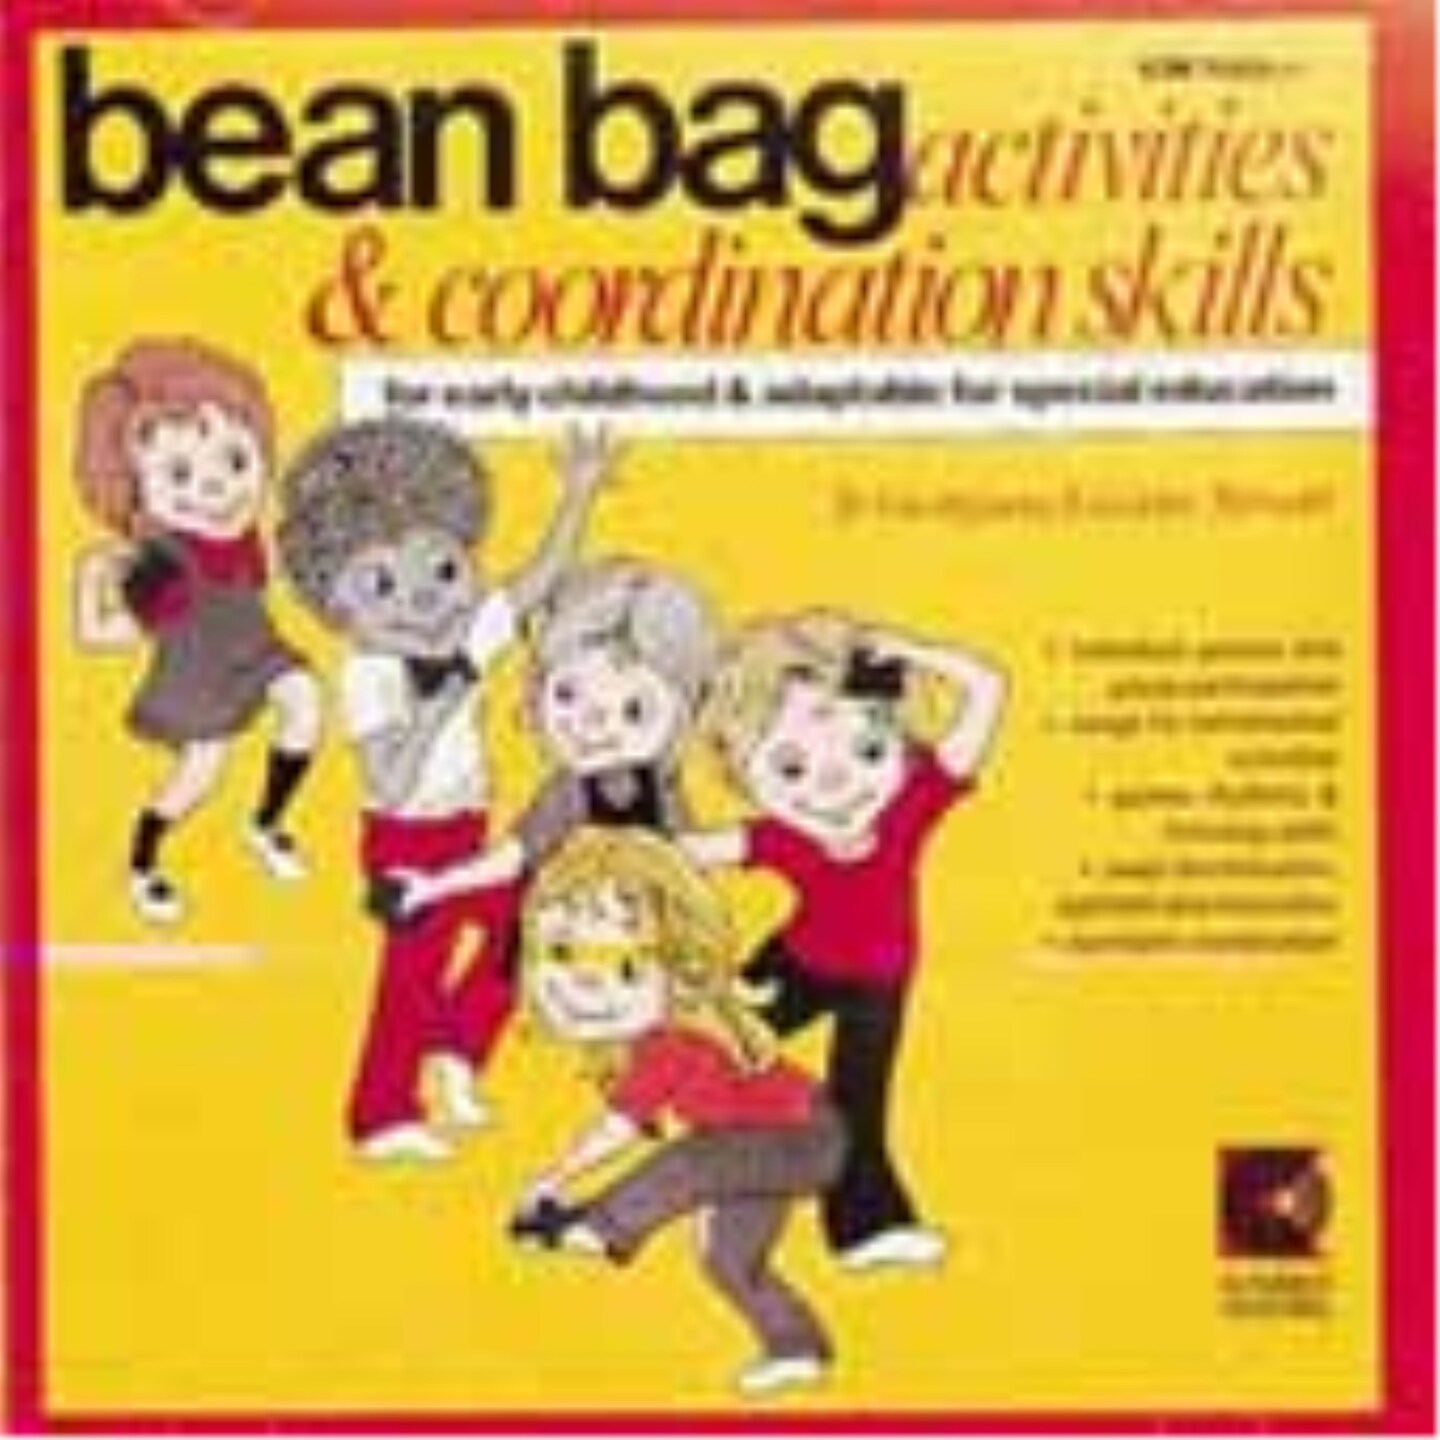 Bean Bag Activities Educational CD